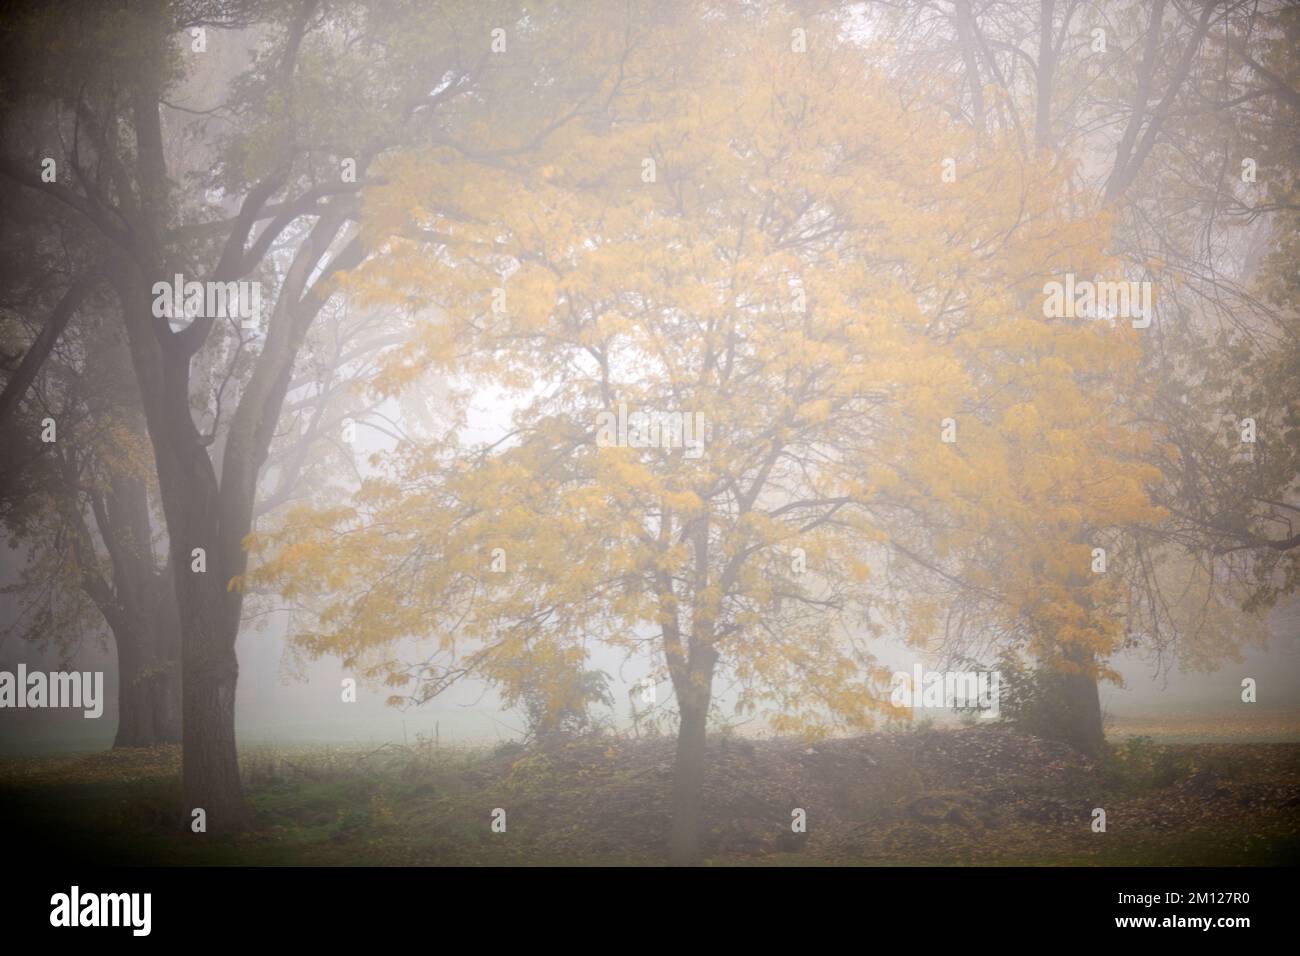 Canada, Ontario, Niagara-on-the-Lake, groupe d'arbres en brouillard Banque D'Images